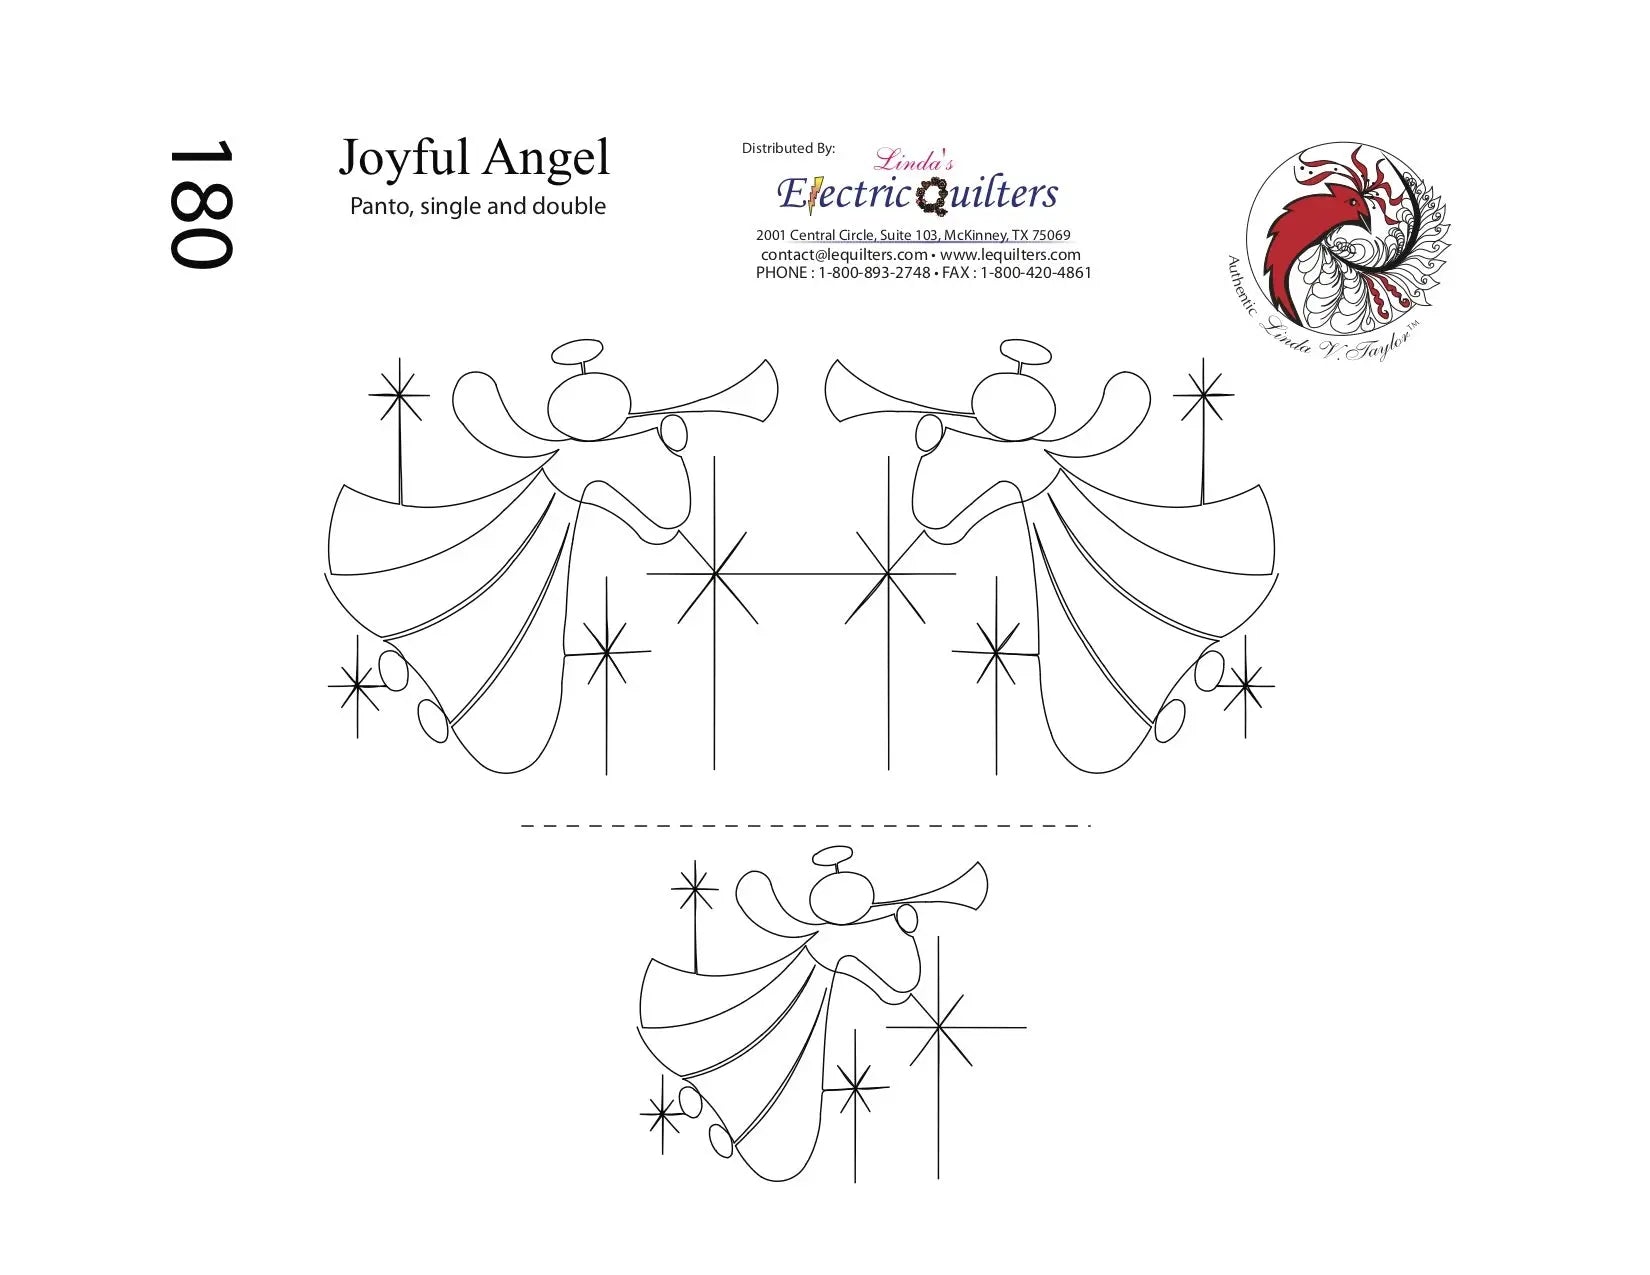 180 Joyful Angels Pantograph by Linda V. Taylor - Linda's Electric Quilters